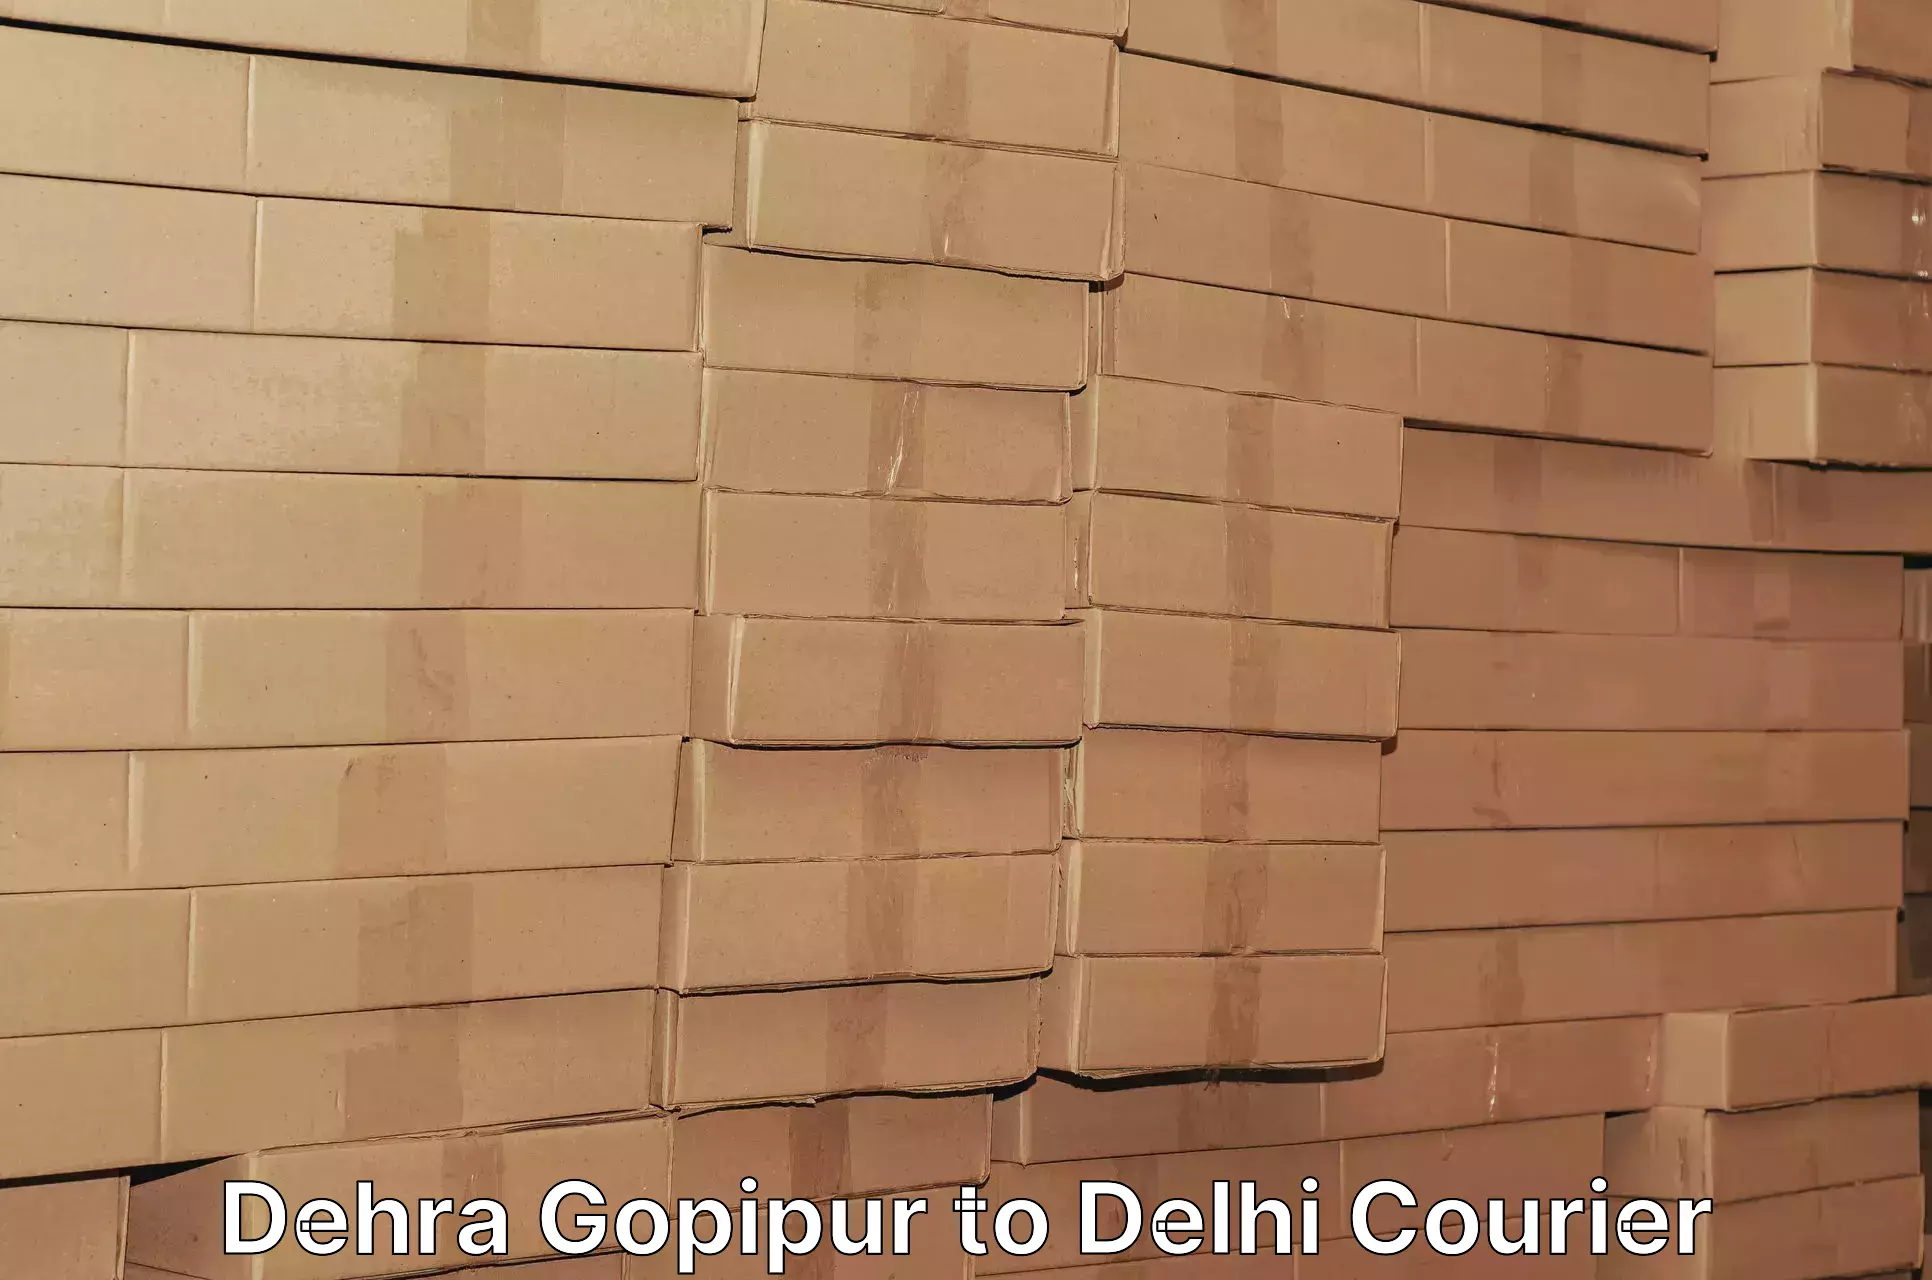 Logistics service provider Dehra Gopipur to Delhi